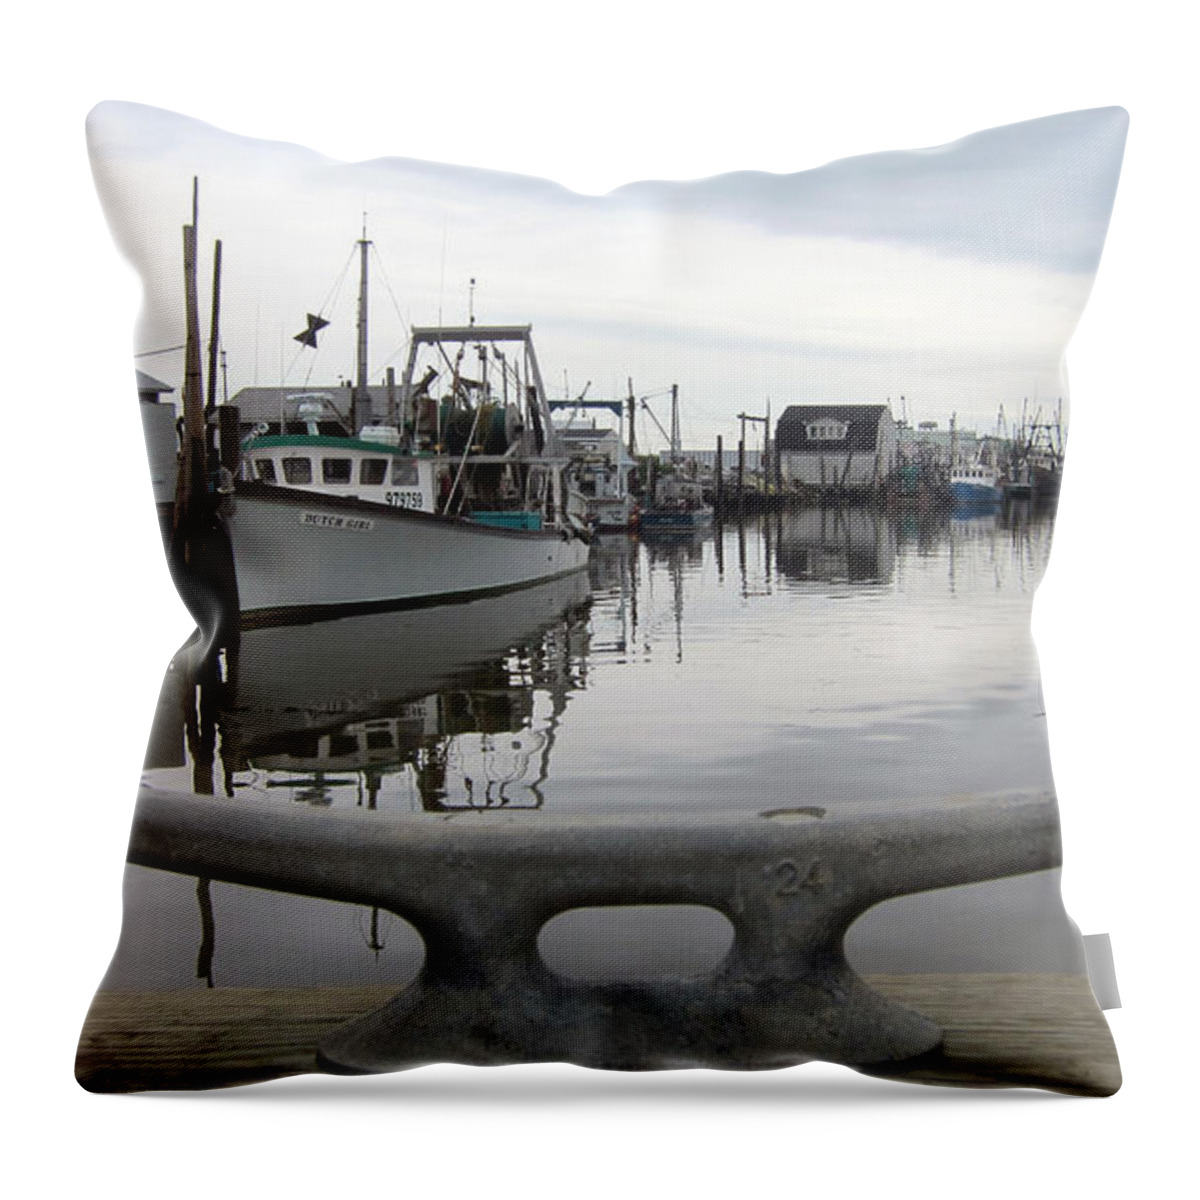 Nj Shore Throw Pillow featuring the photograph Belford NJ 2 by Leonardo Ruggieri